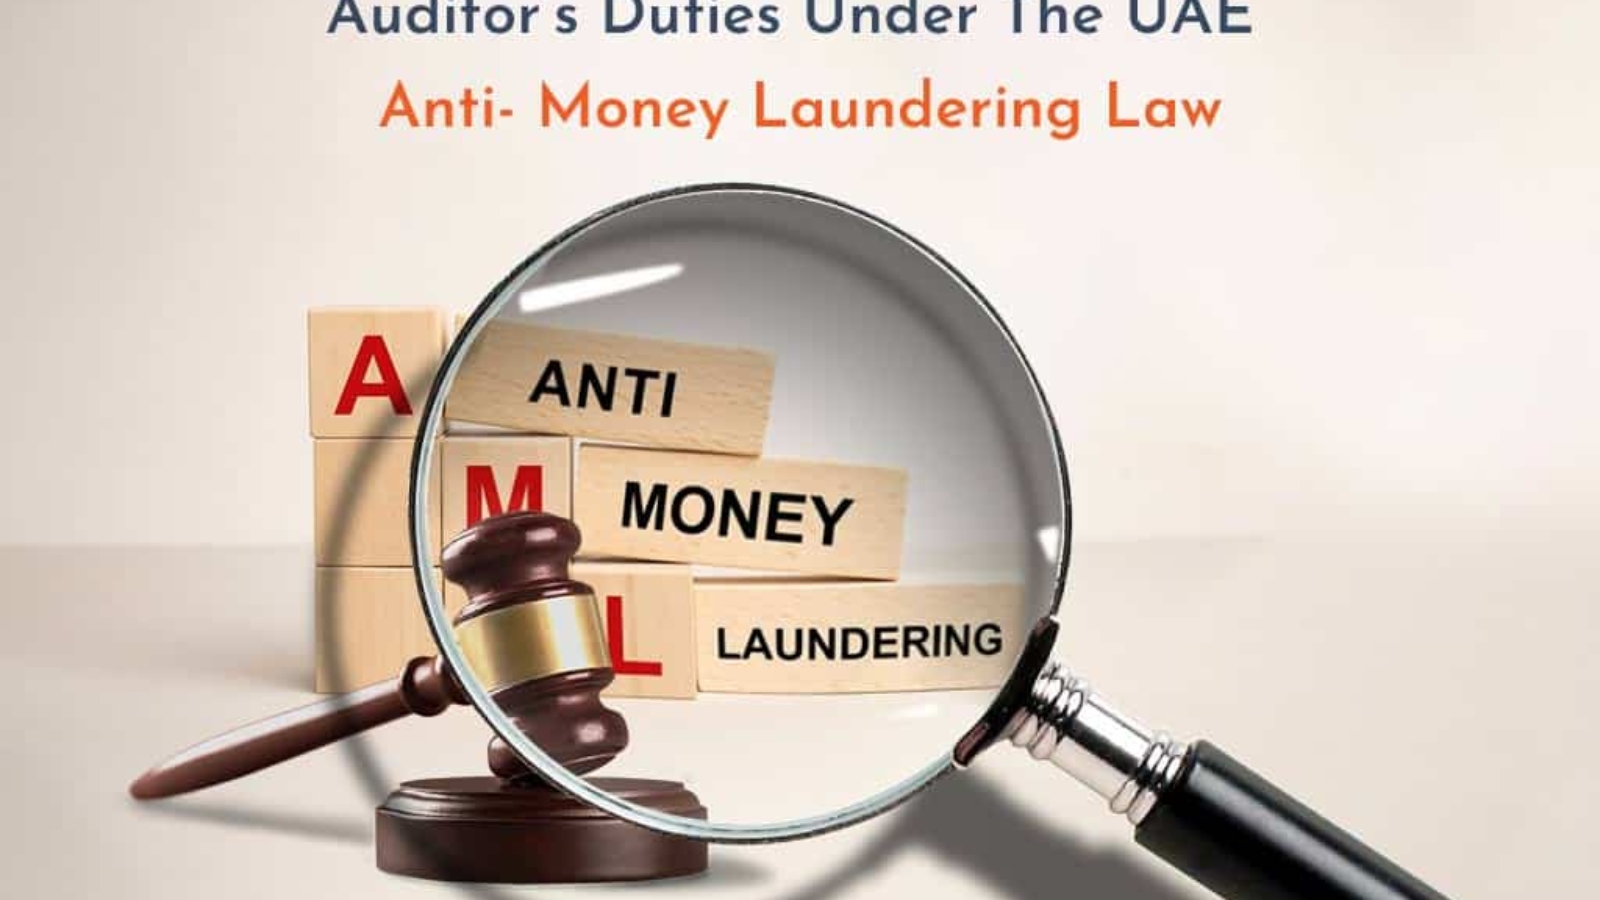 Auditor's Duties Under the UAE Anti- Money Laundering Law